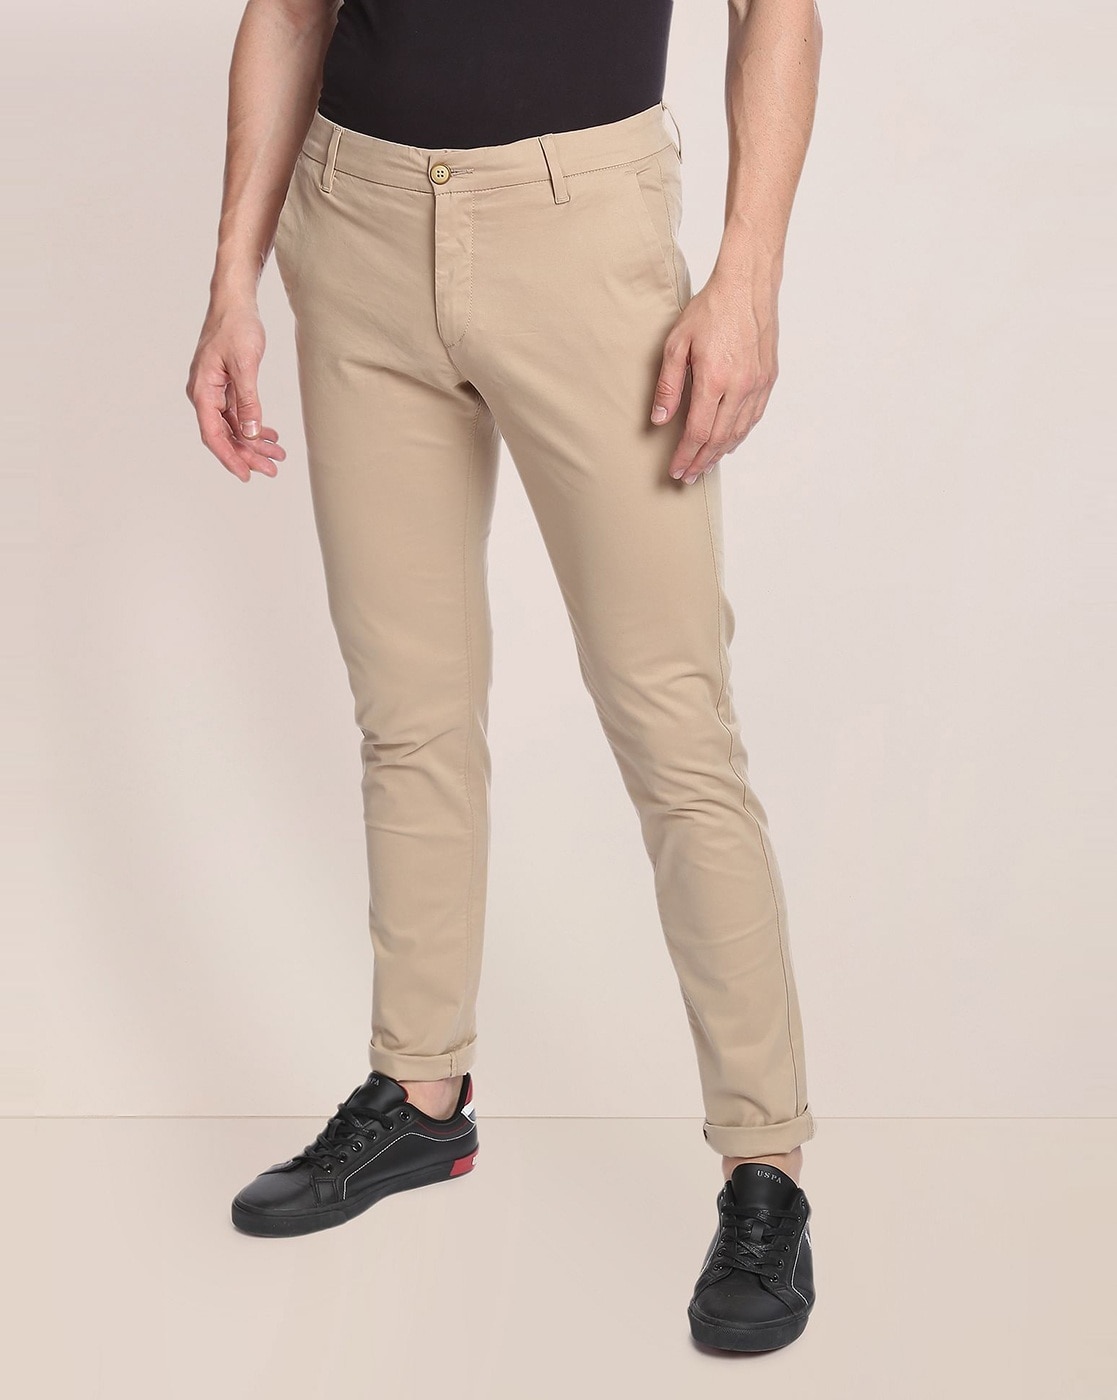 Buy U.S. Polo Assn. Girls' School Uniform - Cotton Twill Khaki Jogger Pants  (2 Pack), Khaki Flat Fit, 4 at Amazon.in